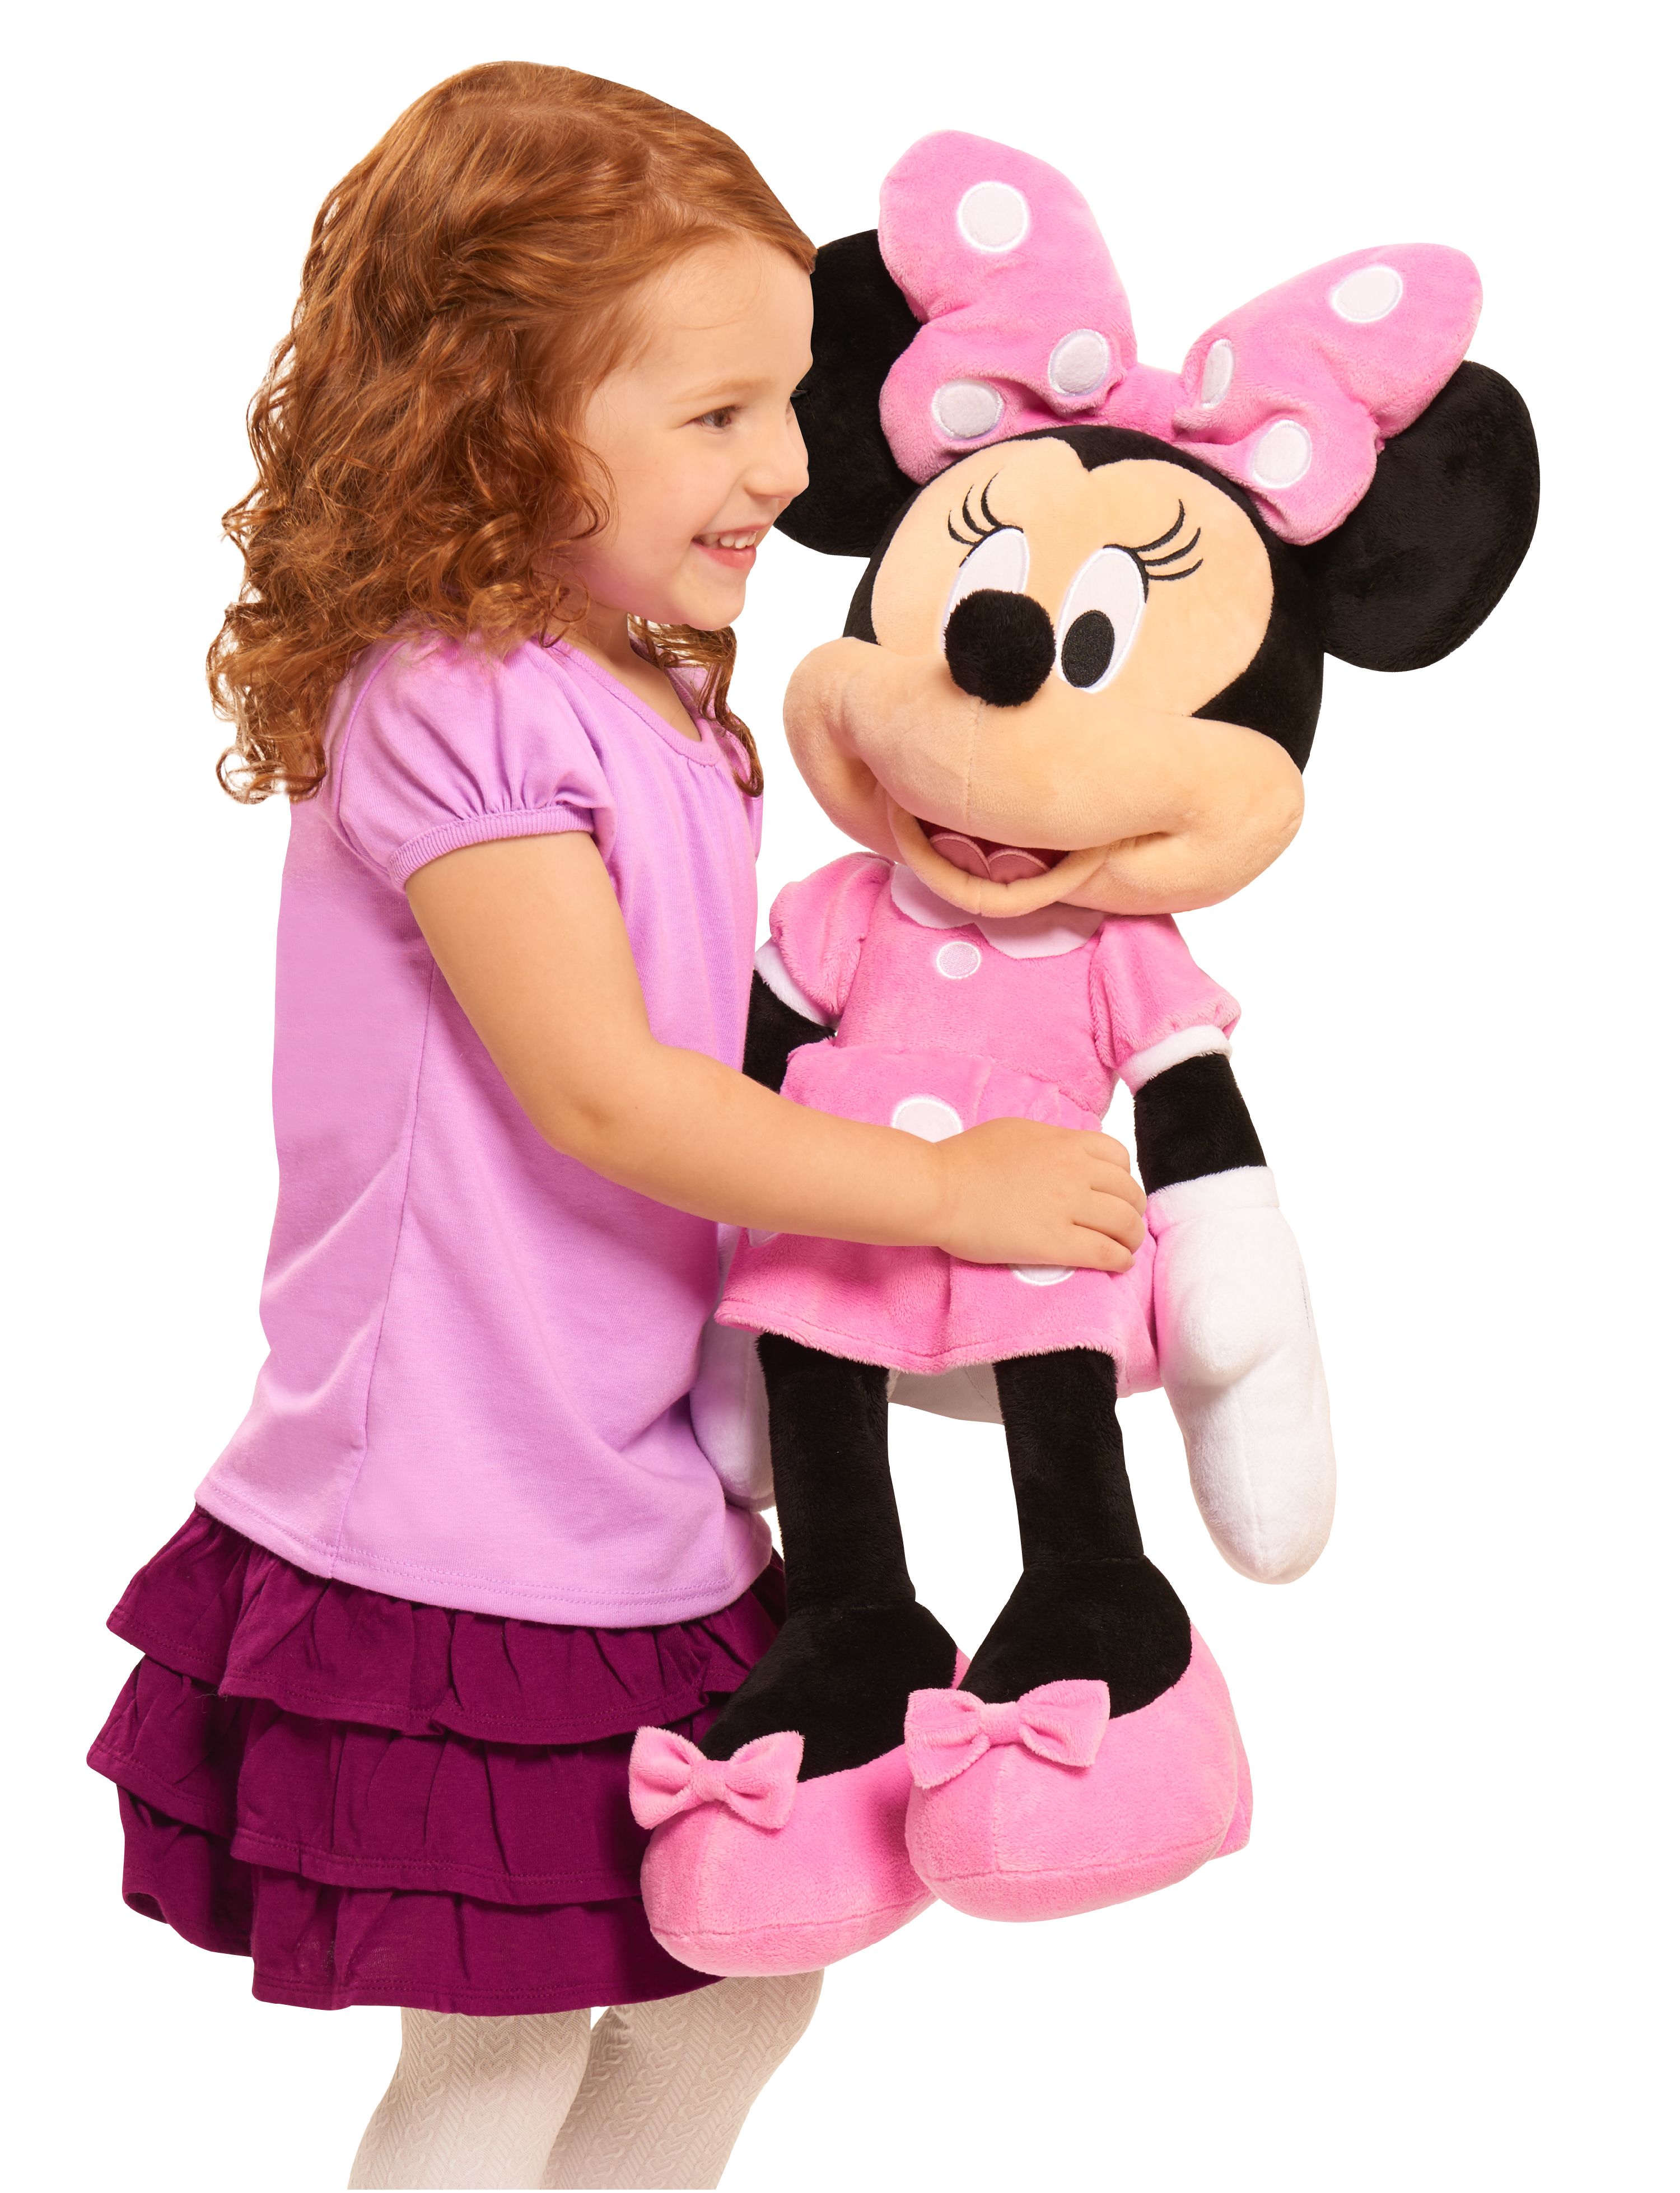 Disney Minnie Mouse Large Plush - image 1 of 4